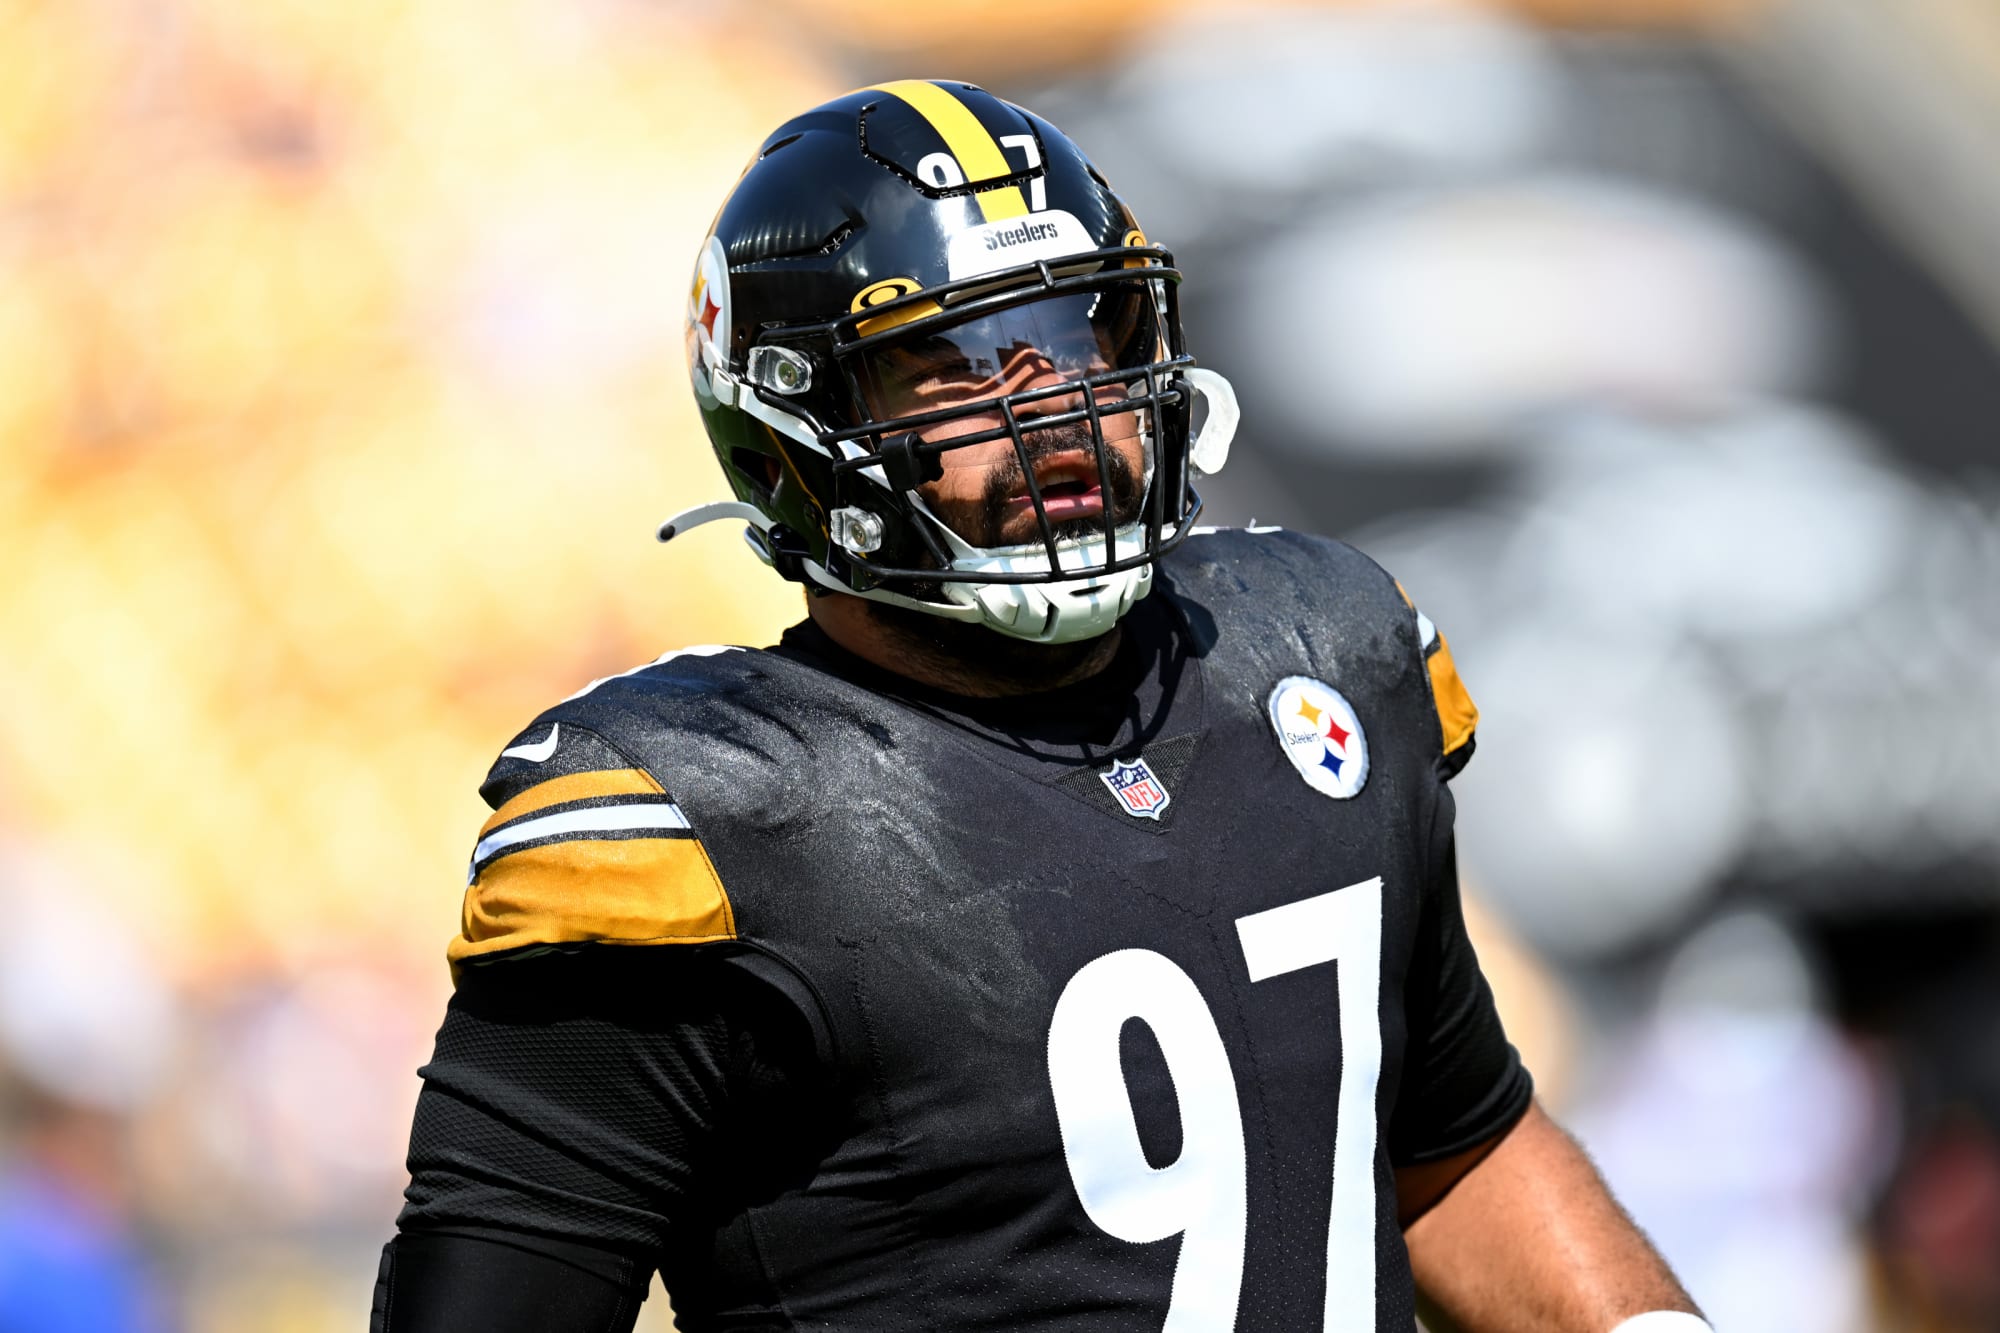 Should Cameron Heyward get traded in a Steelers rebuild?